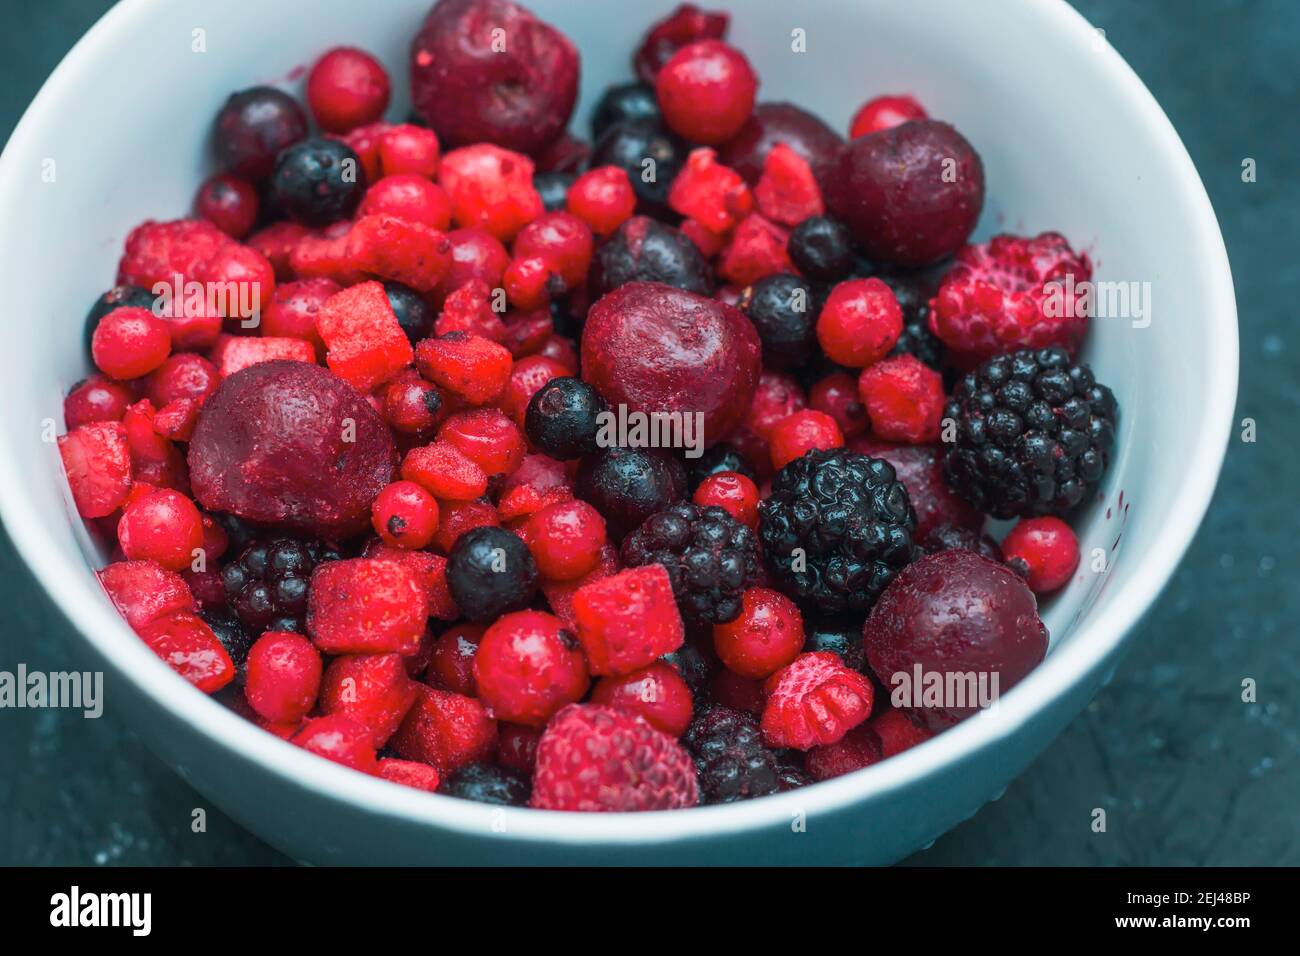 Close up of frozen mixed fruit - berries Stock Photo